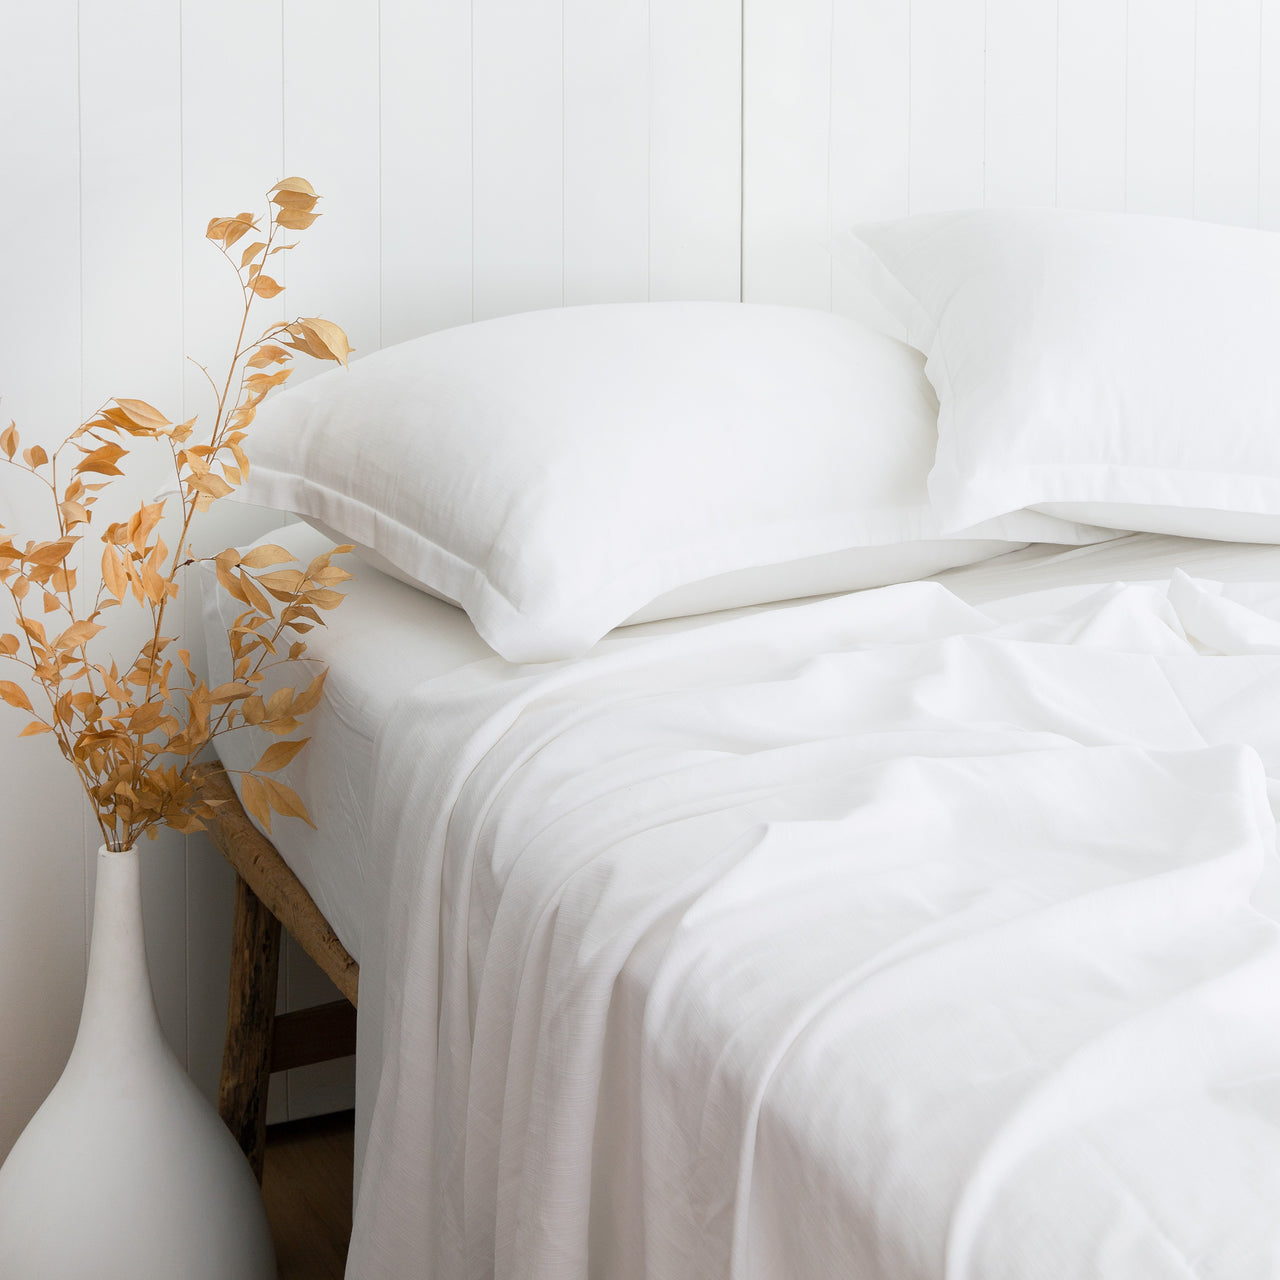 Flat Sheet - Loom Living white  bamboo top sheet bamboo cotton bed linen